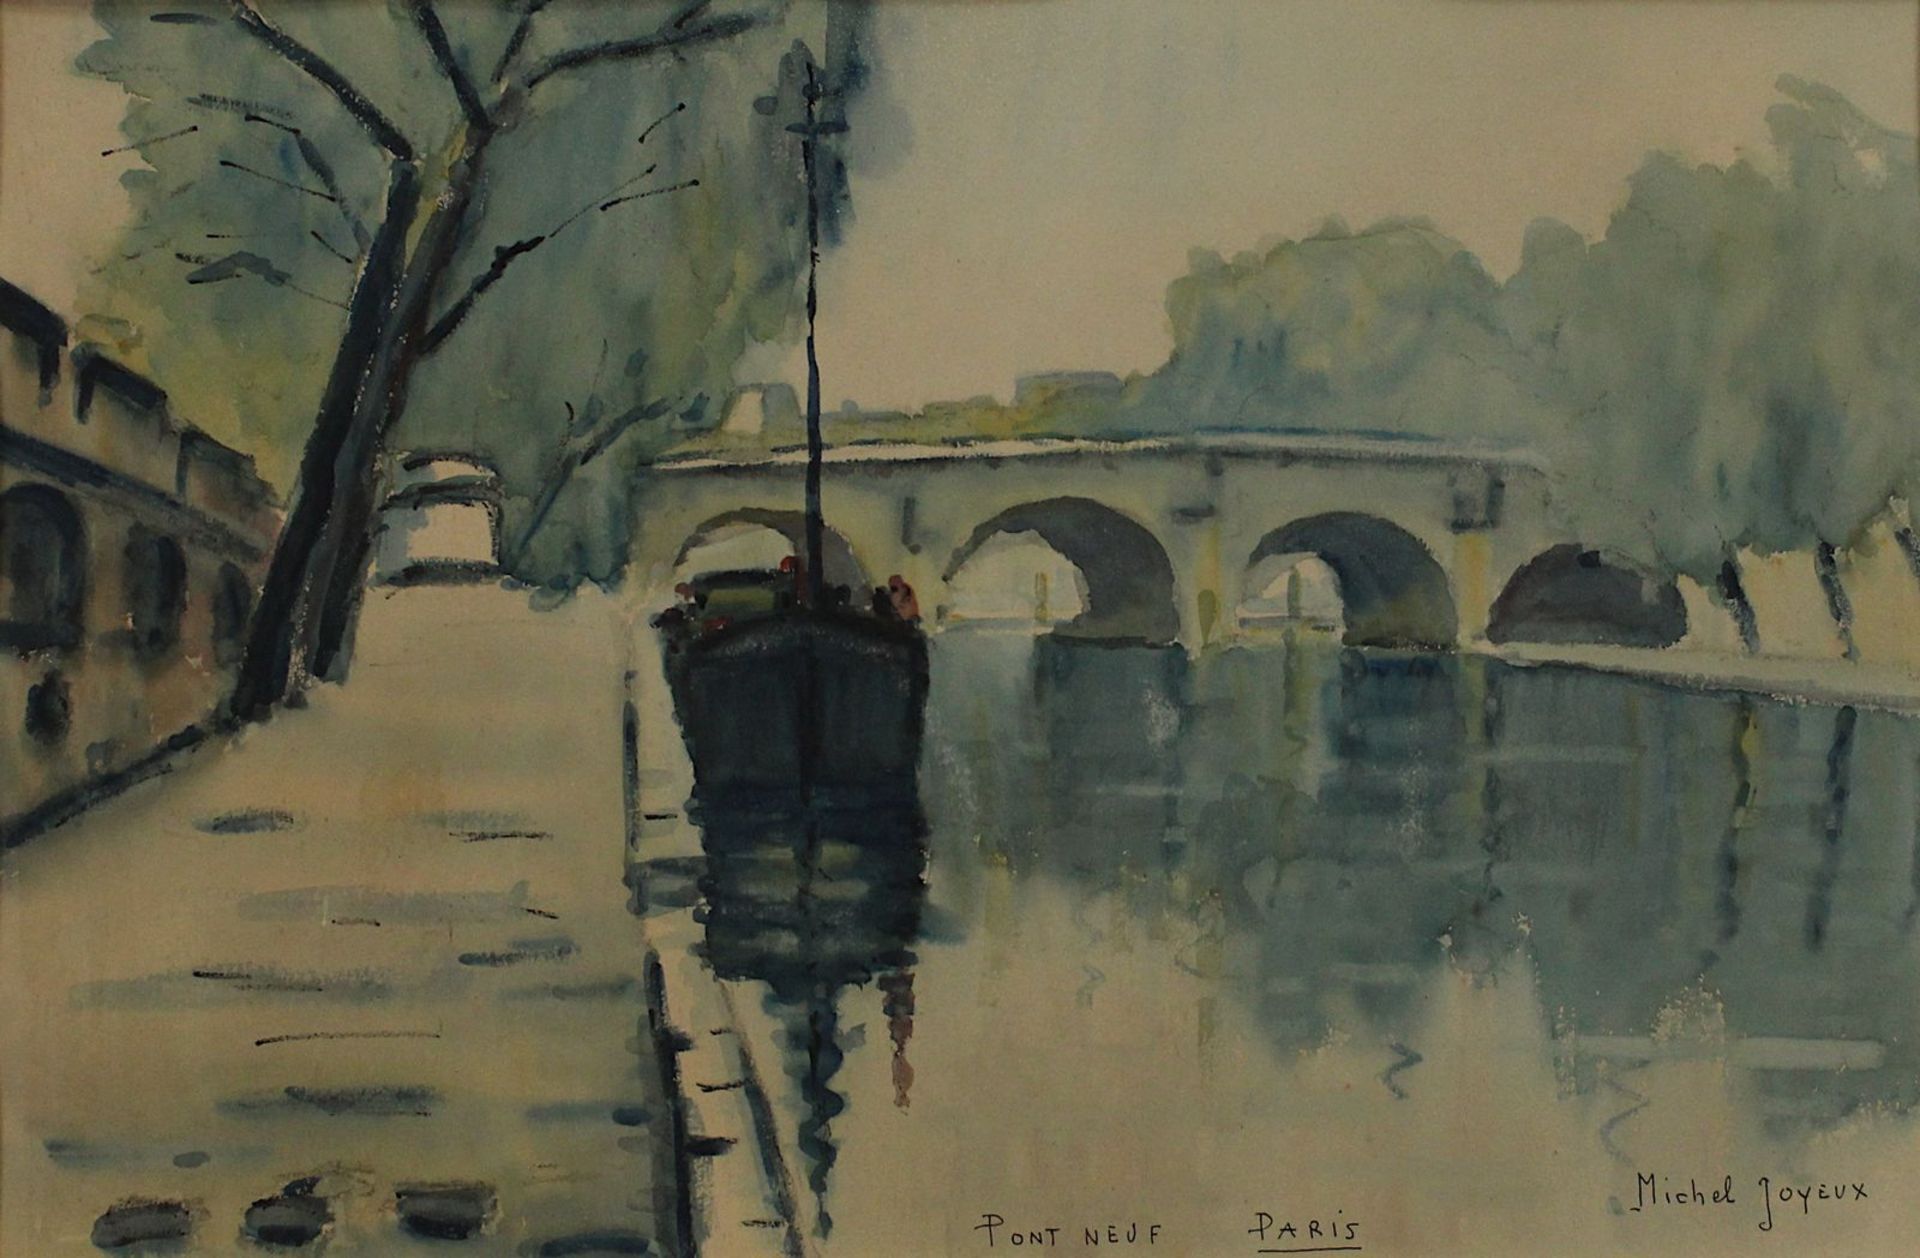 Joyeux, Michel, französischer Künstler 20. Jh., "Pont Neuf Paris", Aquarell, re. unt. sign., am unt. - Image 2 of 2